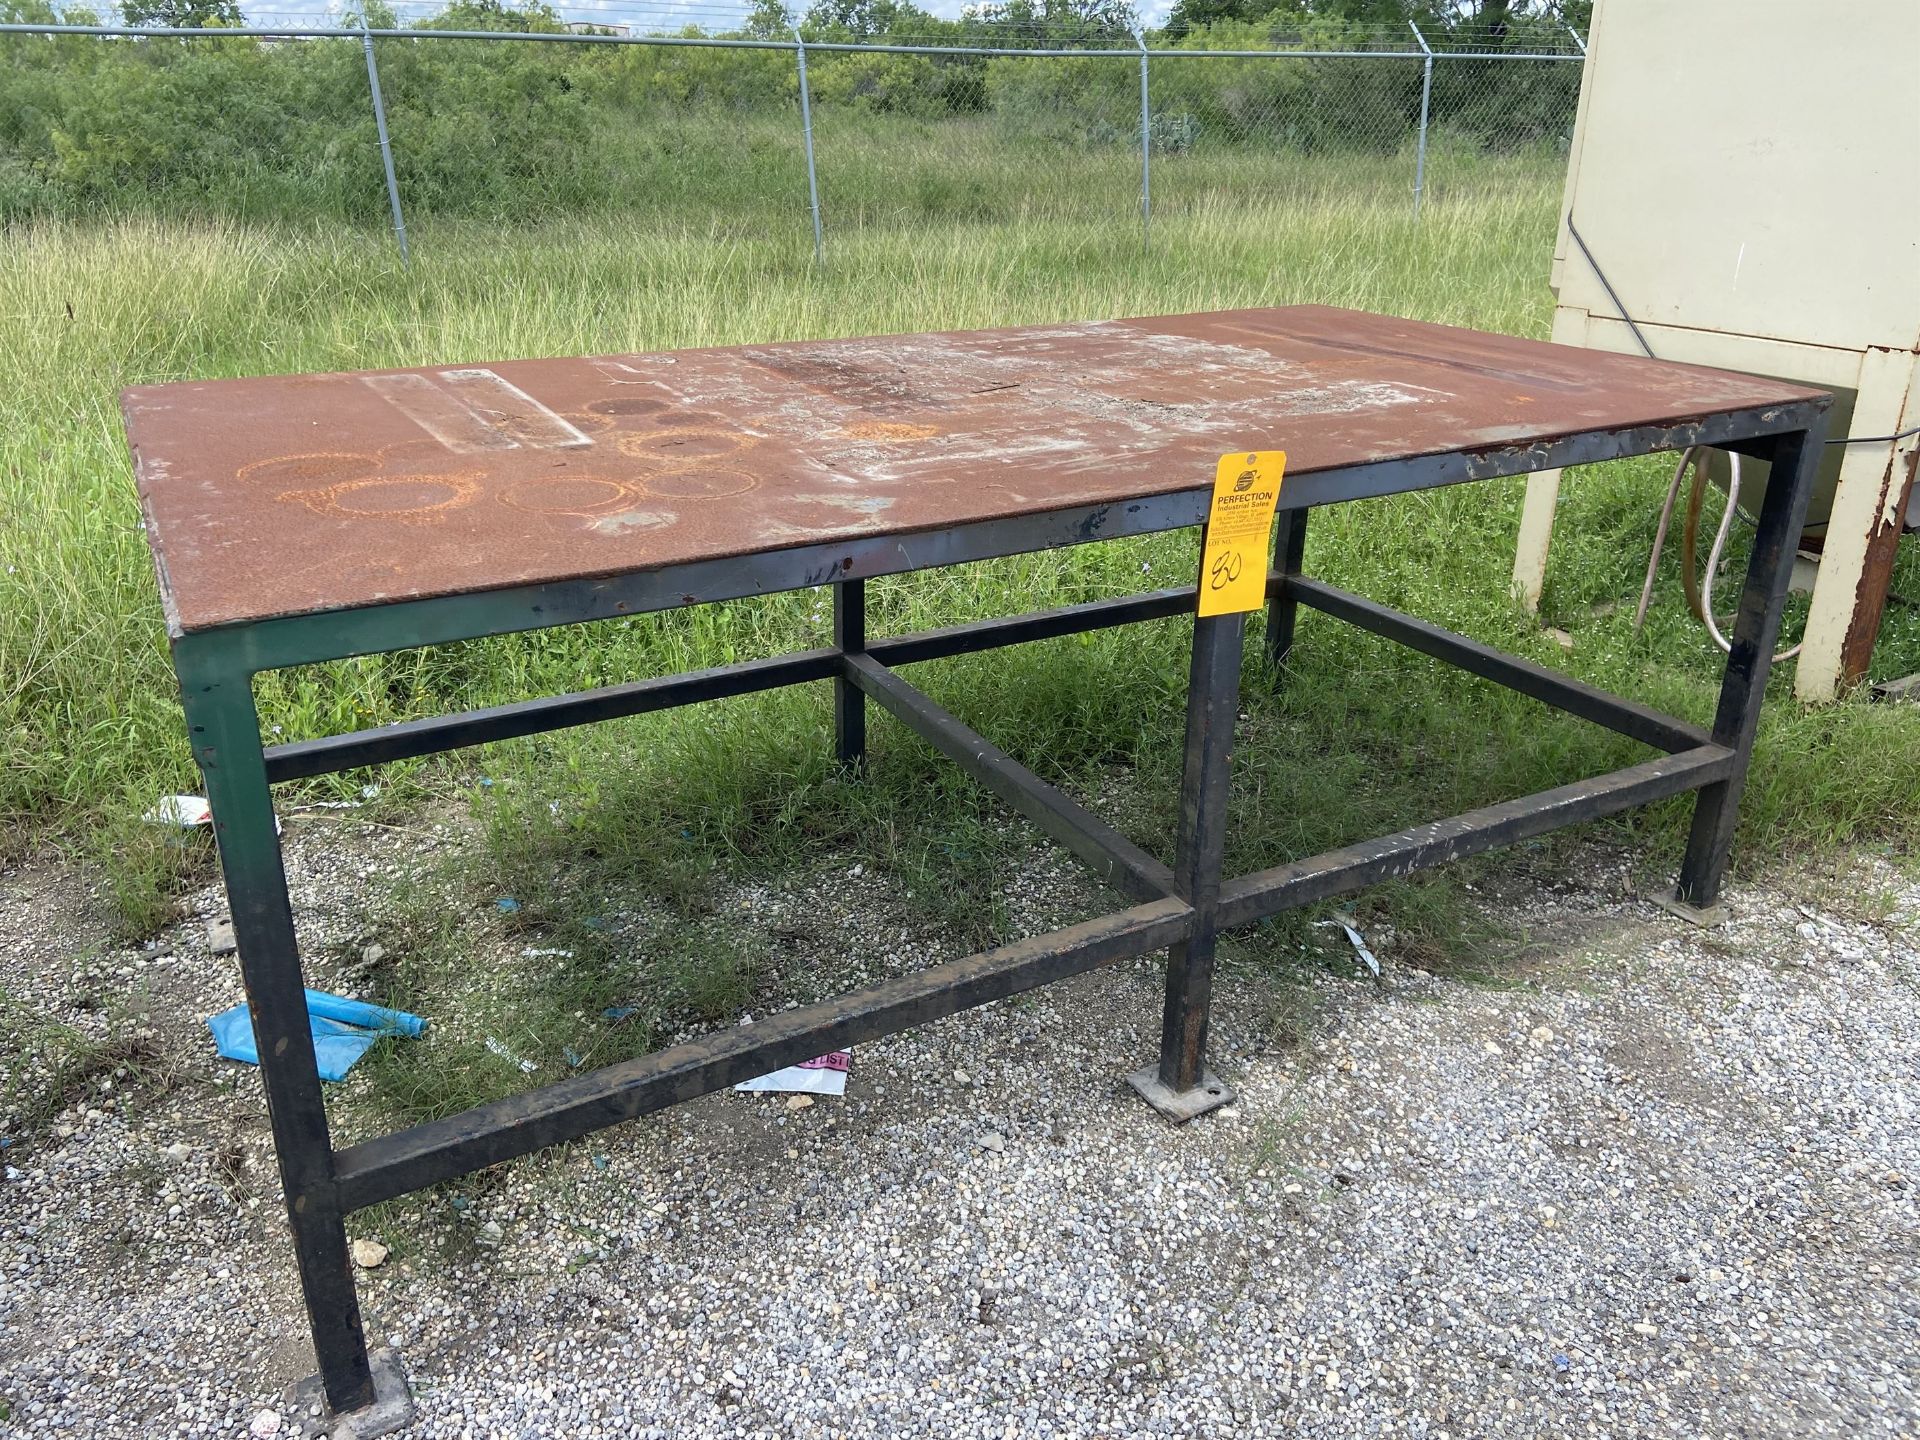 48" x 96" welding Table